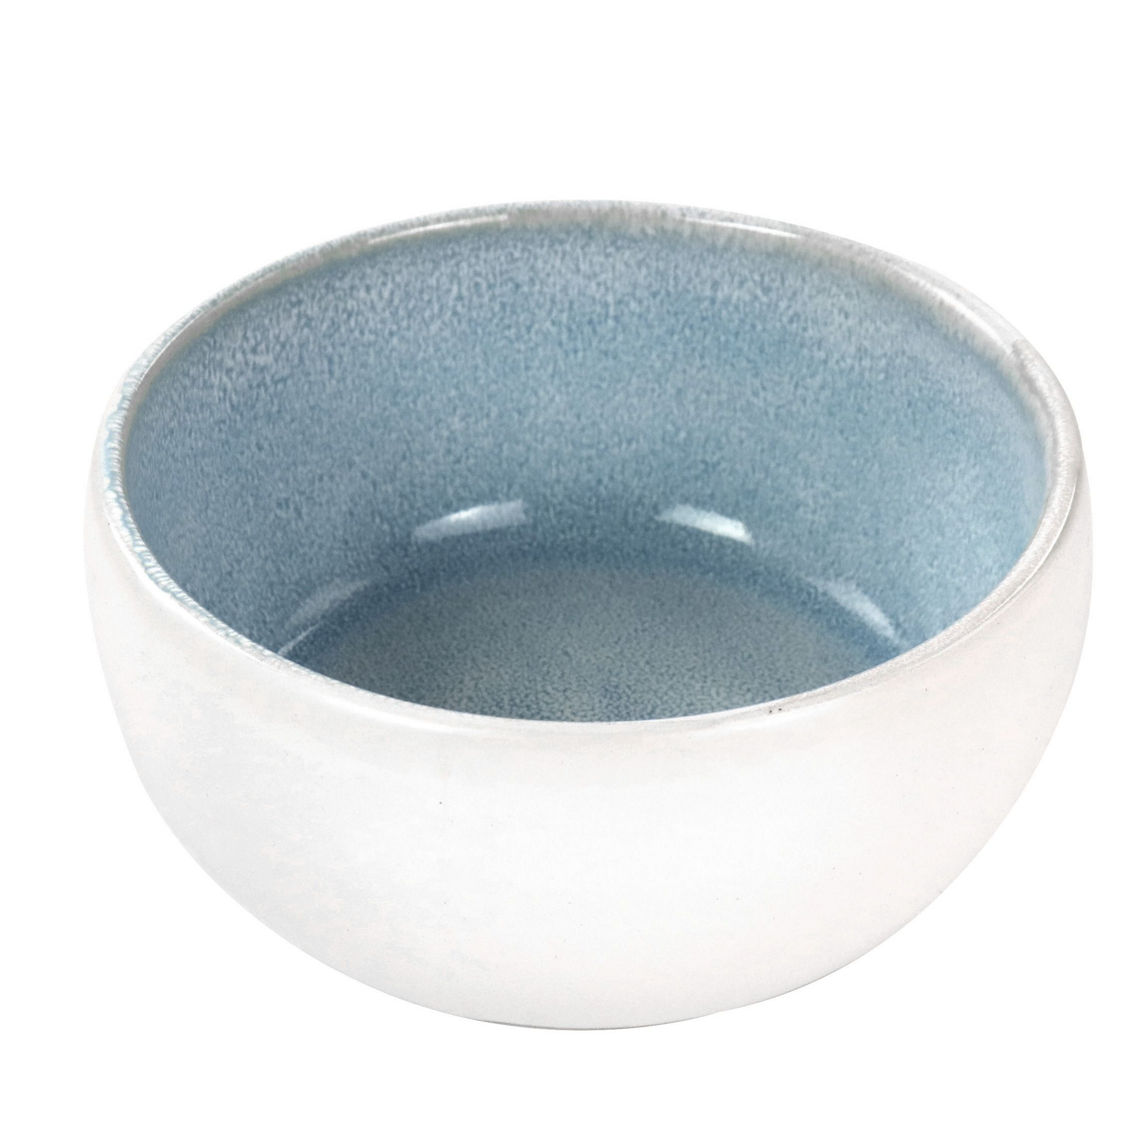 Elama Mocha 16 Piece Stoneware Dinnerware Set in Blue - Image 4 of 5